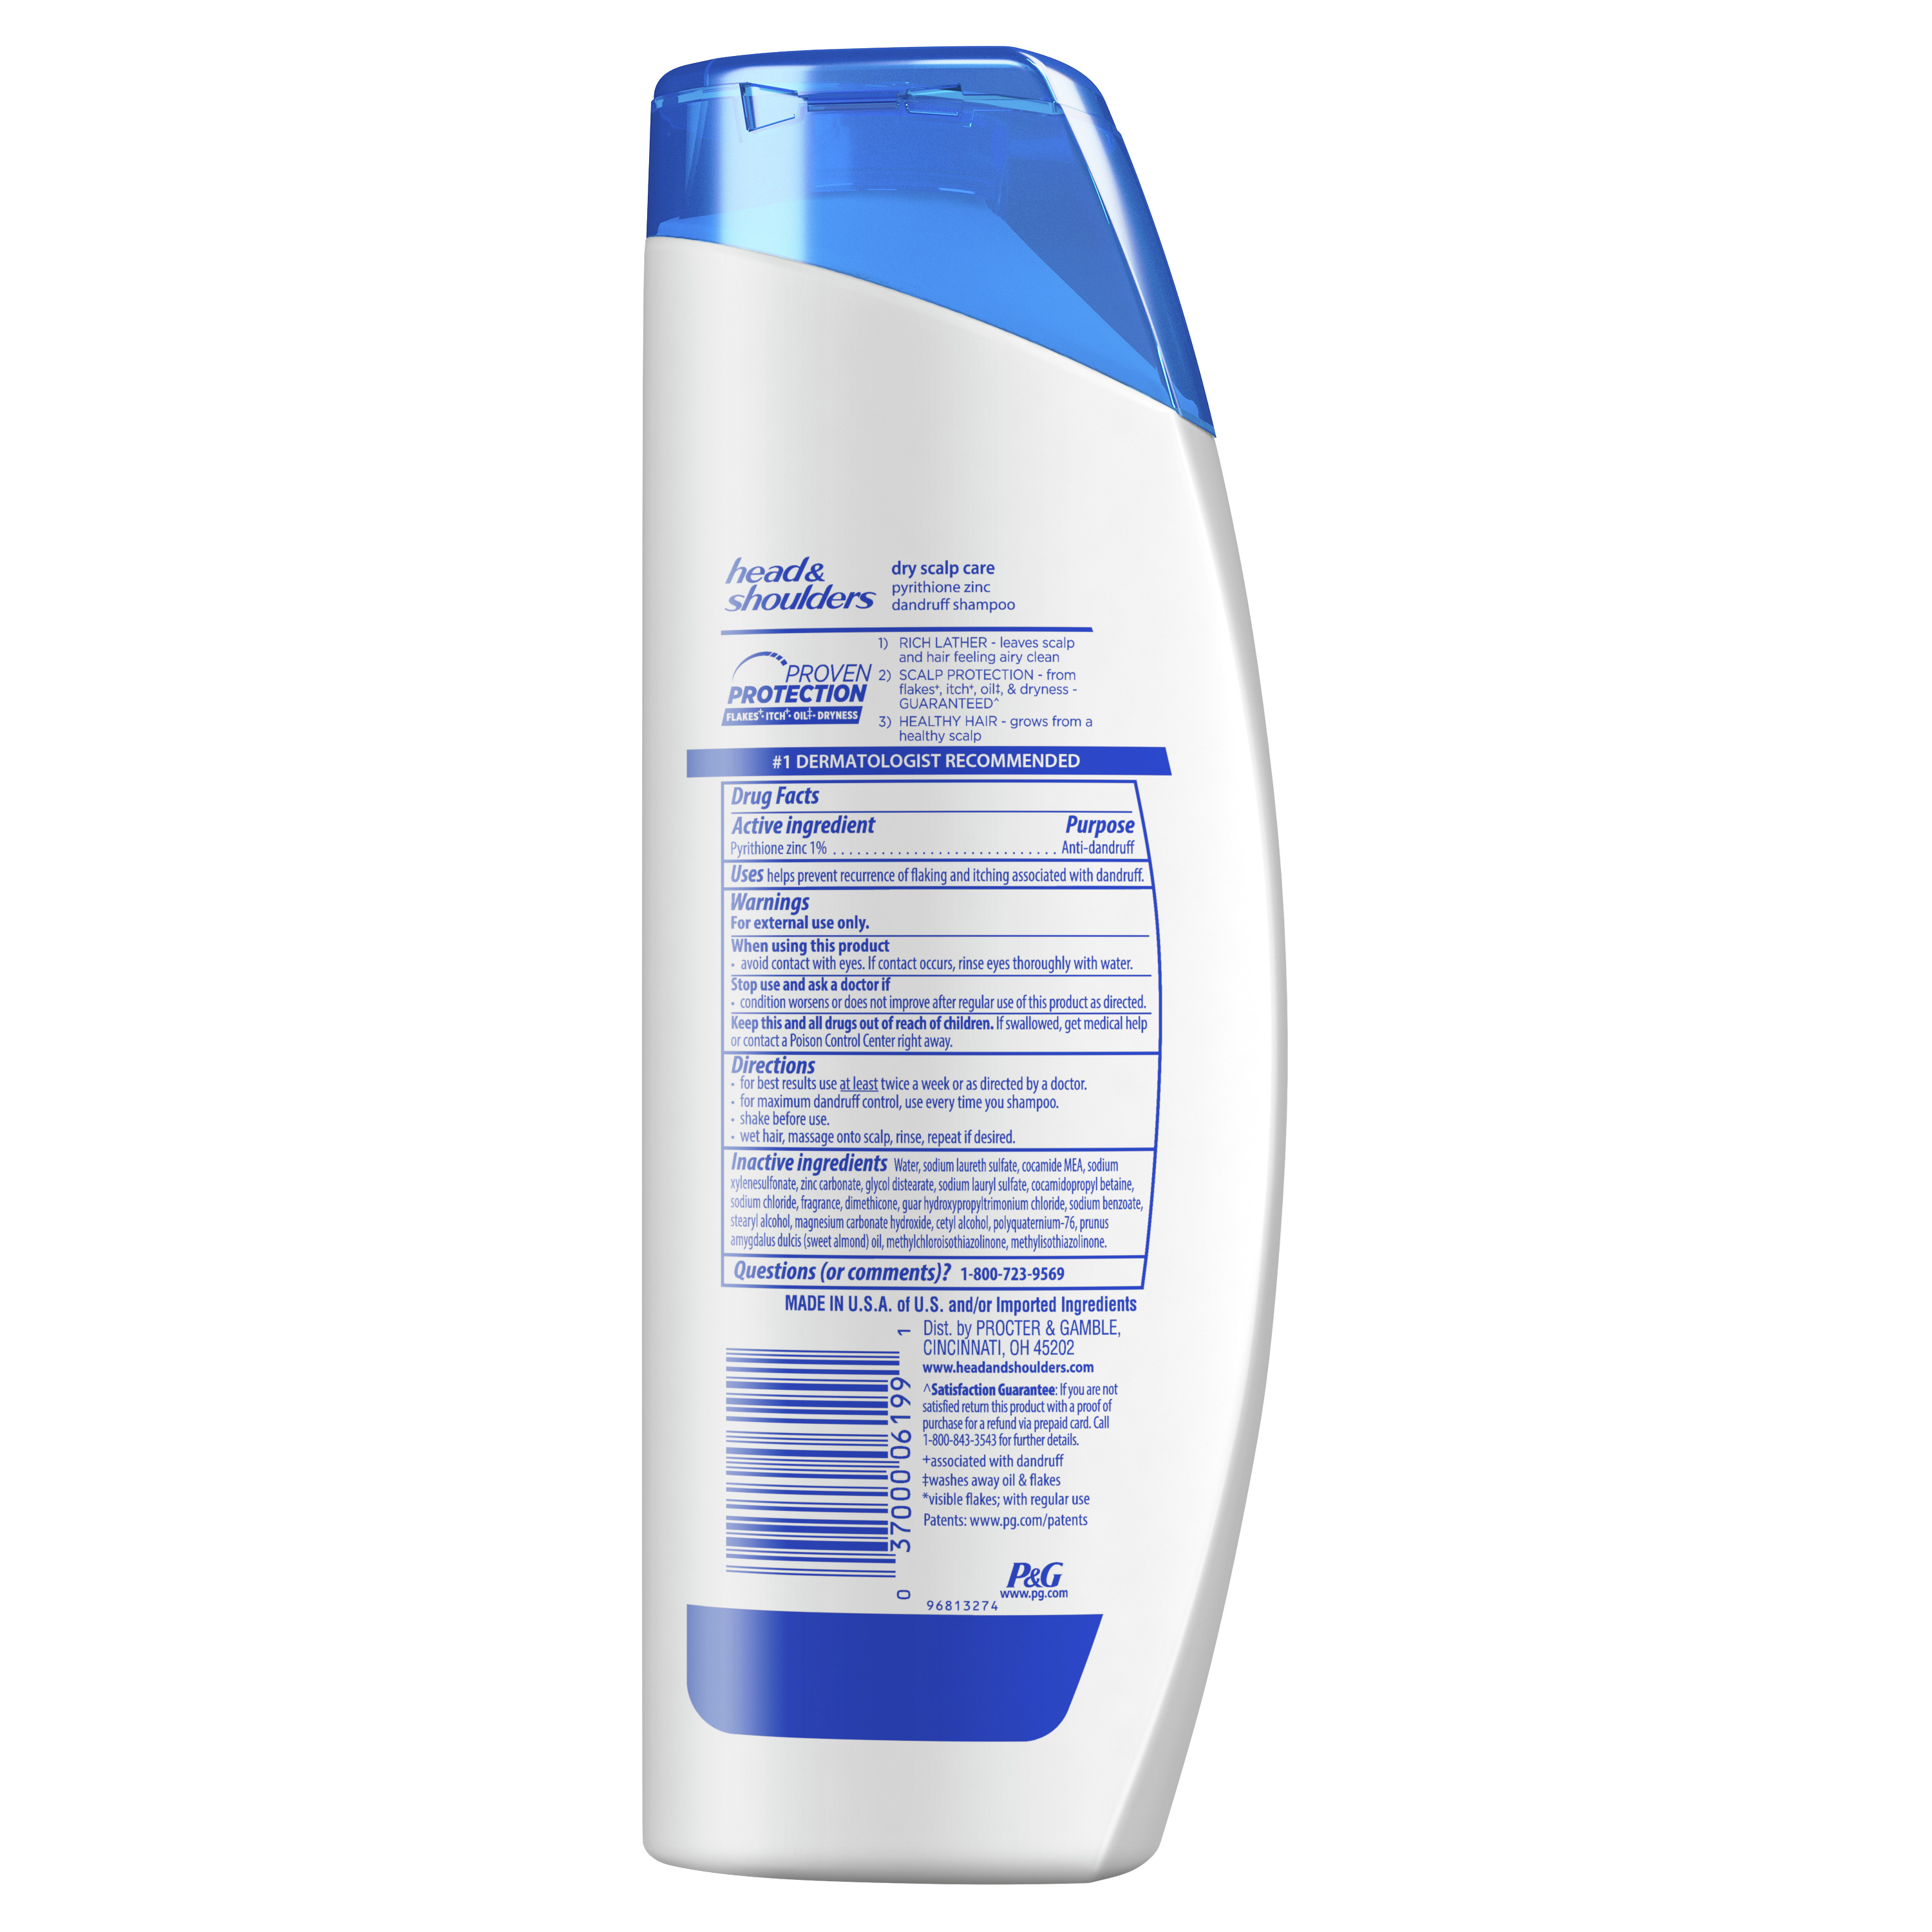 Head & Shoulders Anti-Dandruff Shampoo, Dry Scalp Care, 13.5 fl oz - image 3 of 7